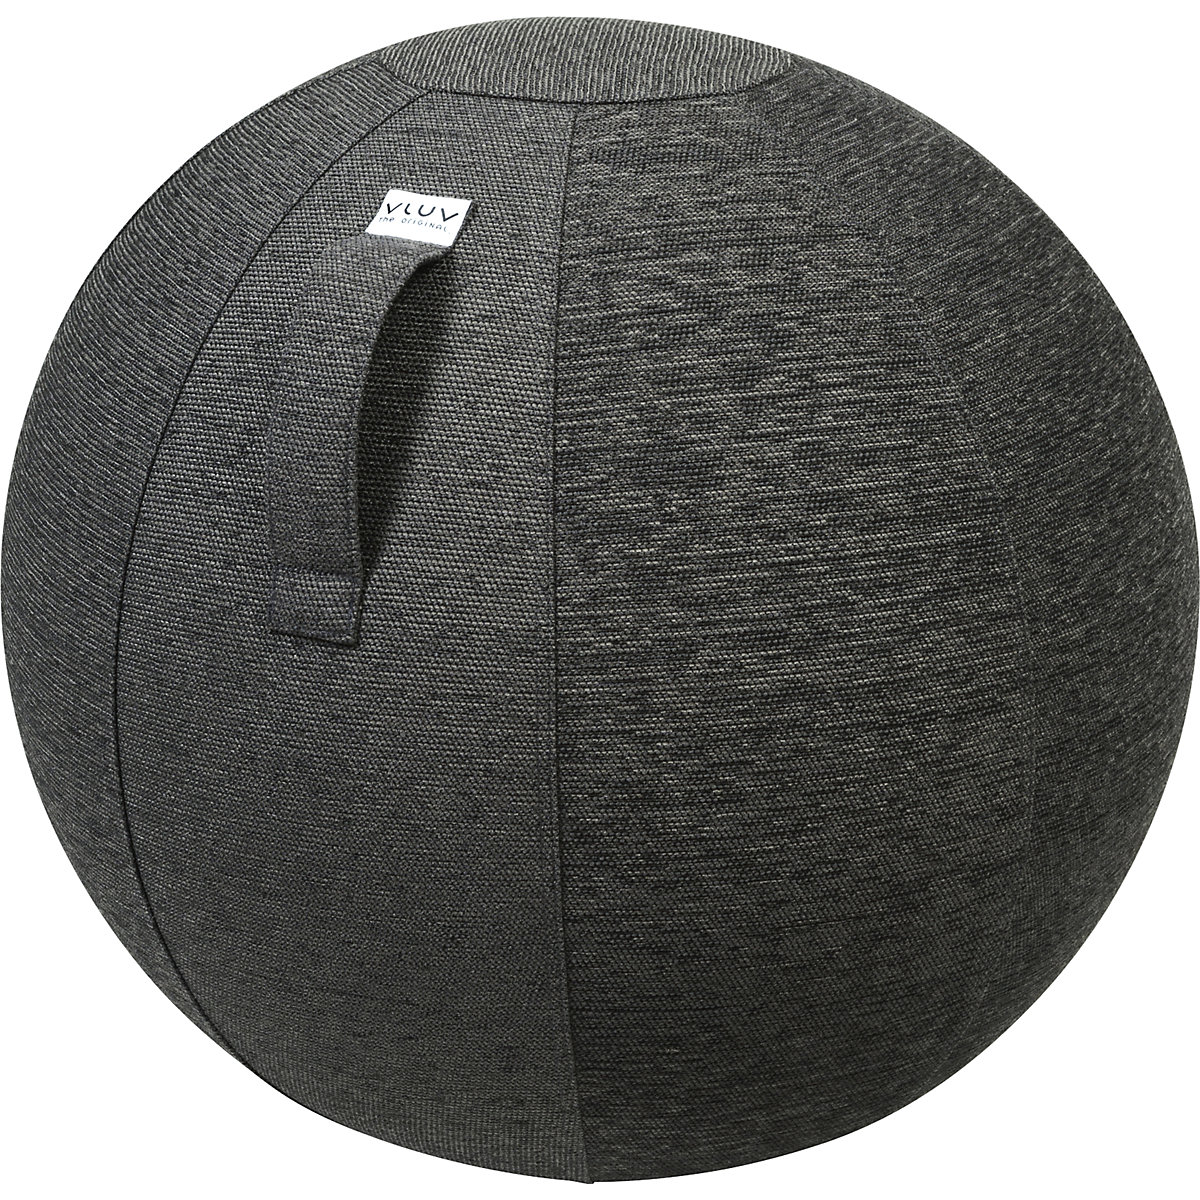 STOV Swiss ball – VLUV, fabric version, 600 – 650 mm, charcoal